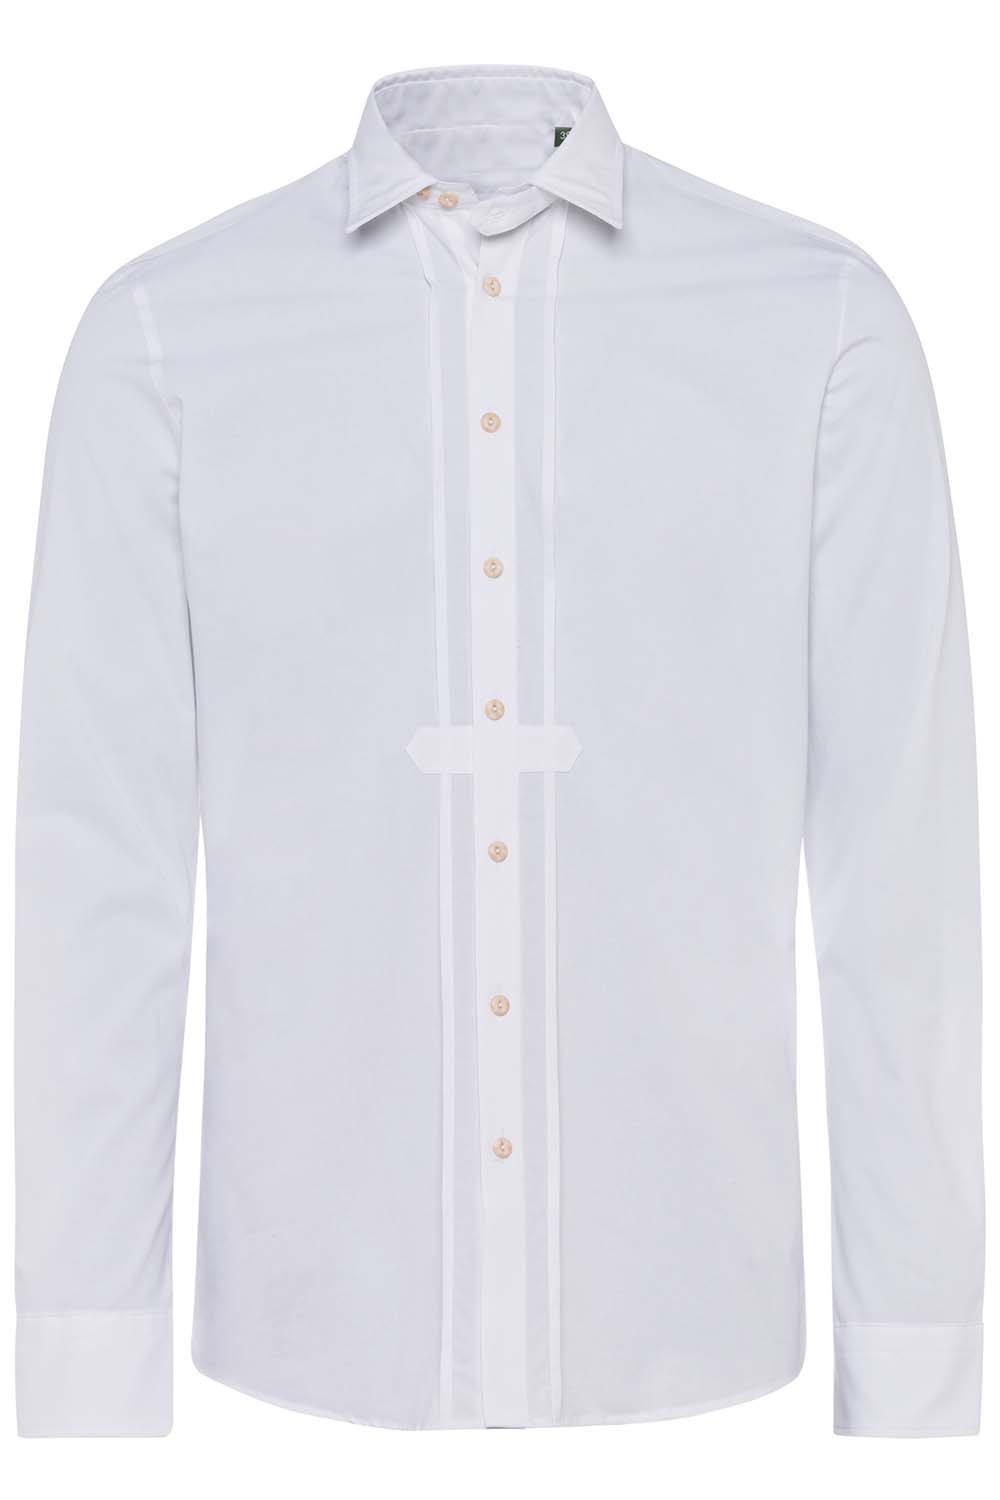 Kimmich Lederhosen White Shirt for Men | Bayerische Alpen™